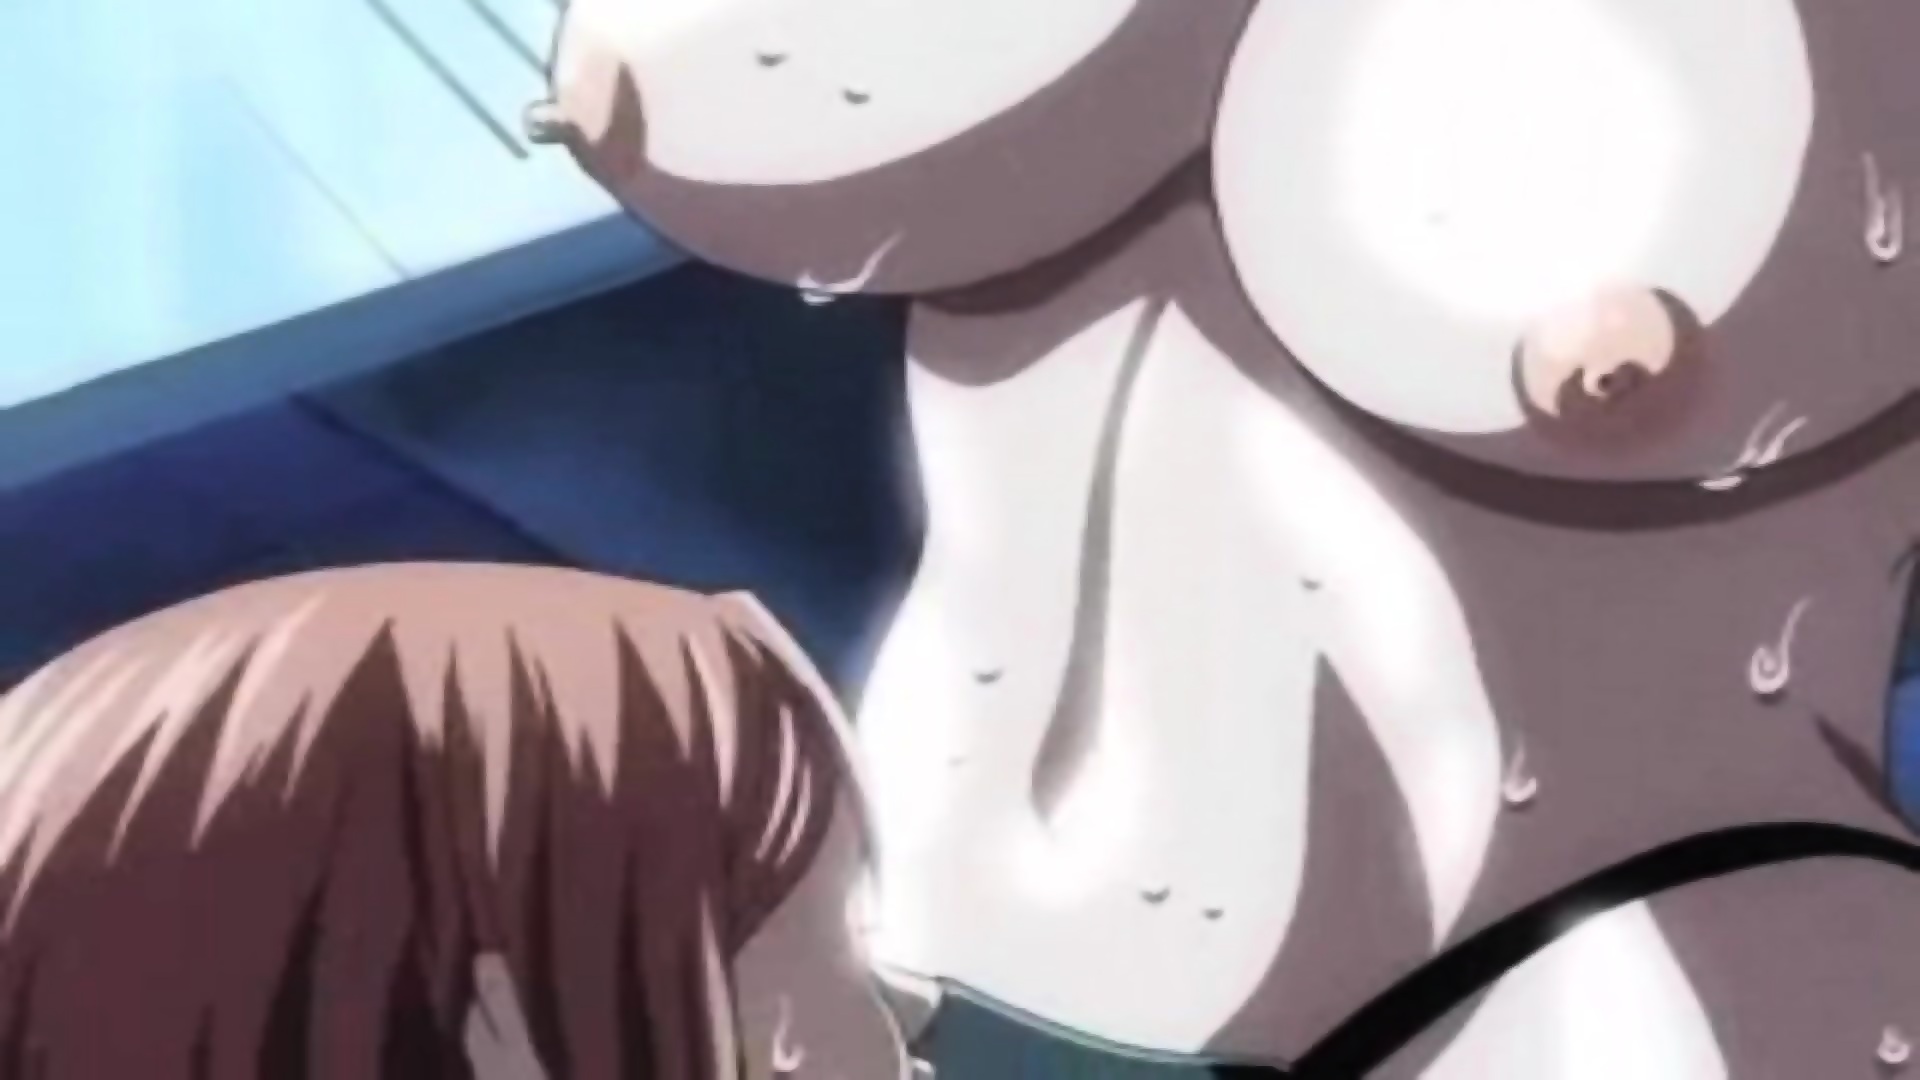 Anime Lesbian Porn Hd Wallpapers - Uncensored Hentai Lesbian Anime Sex Scene HD - EPORNER